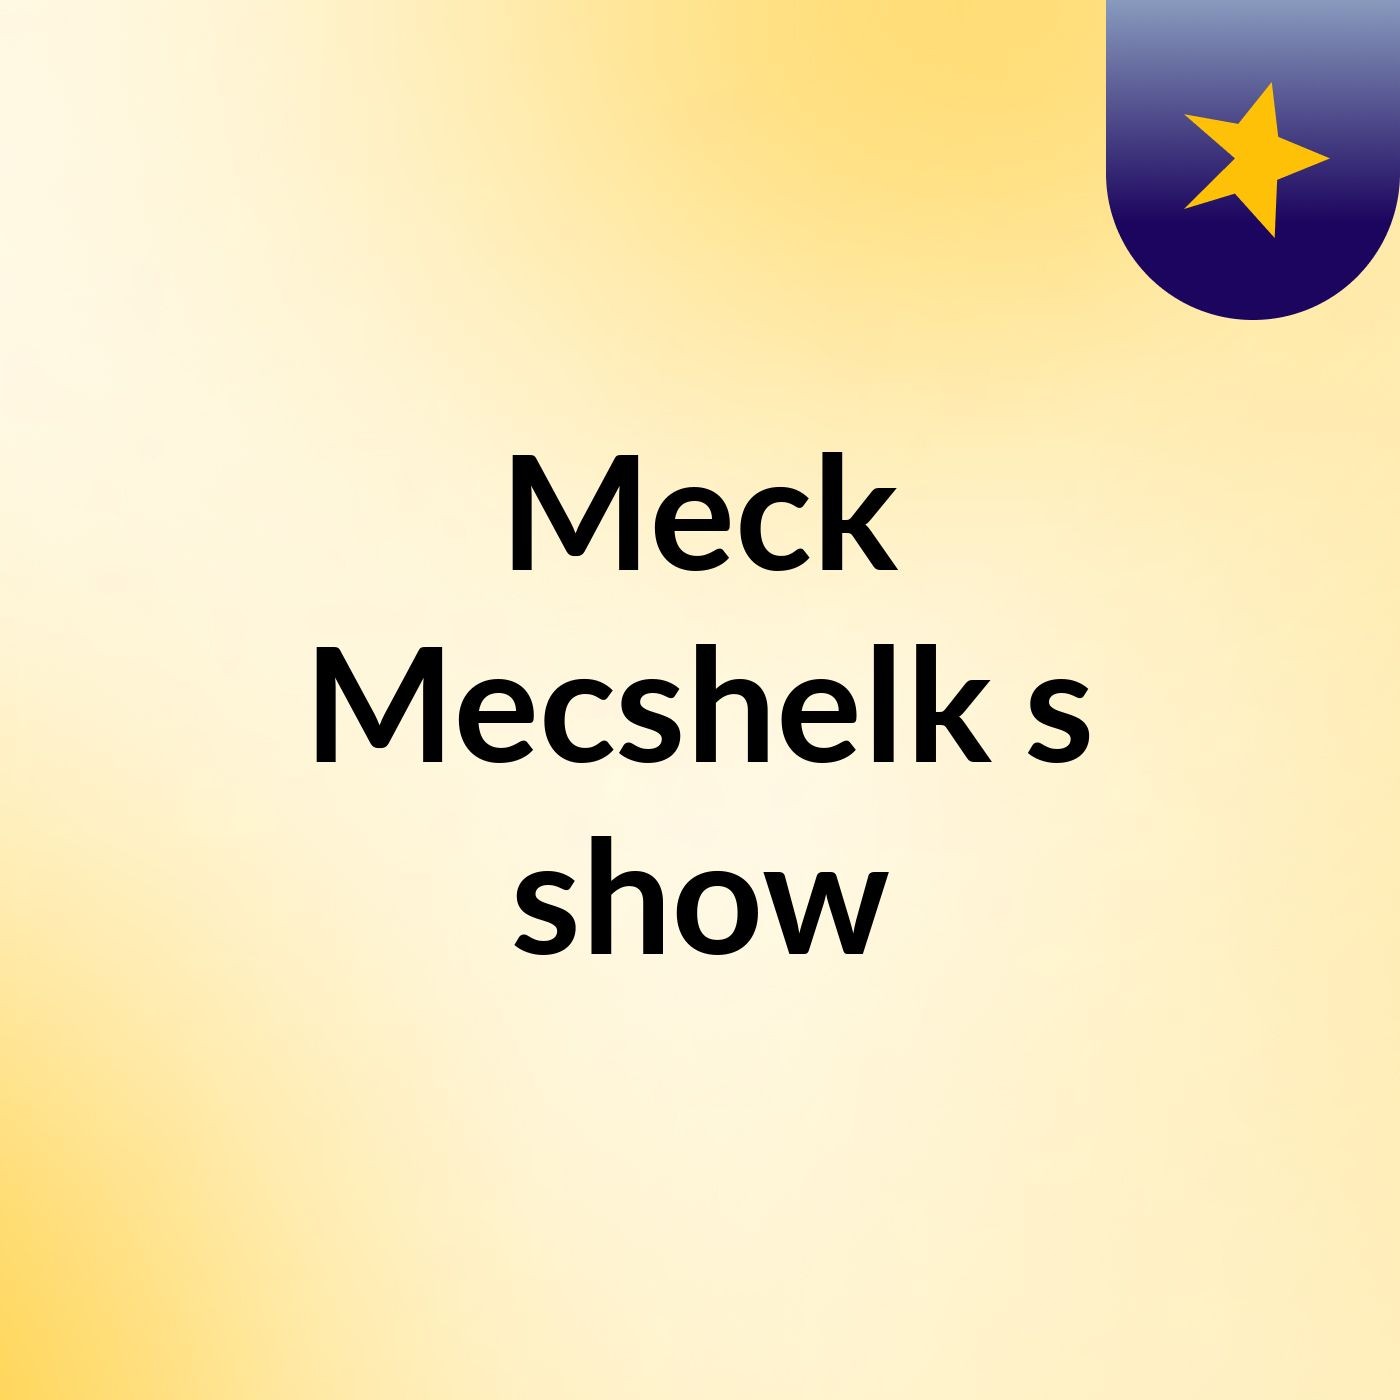 Meck Mecshelk's show